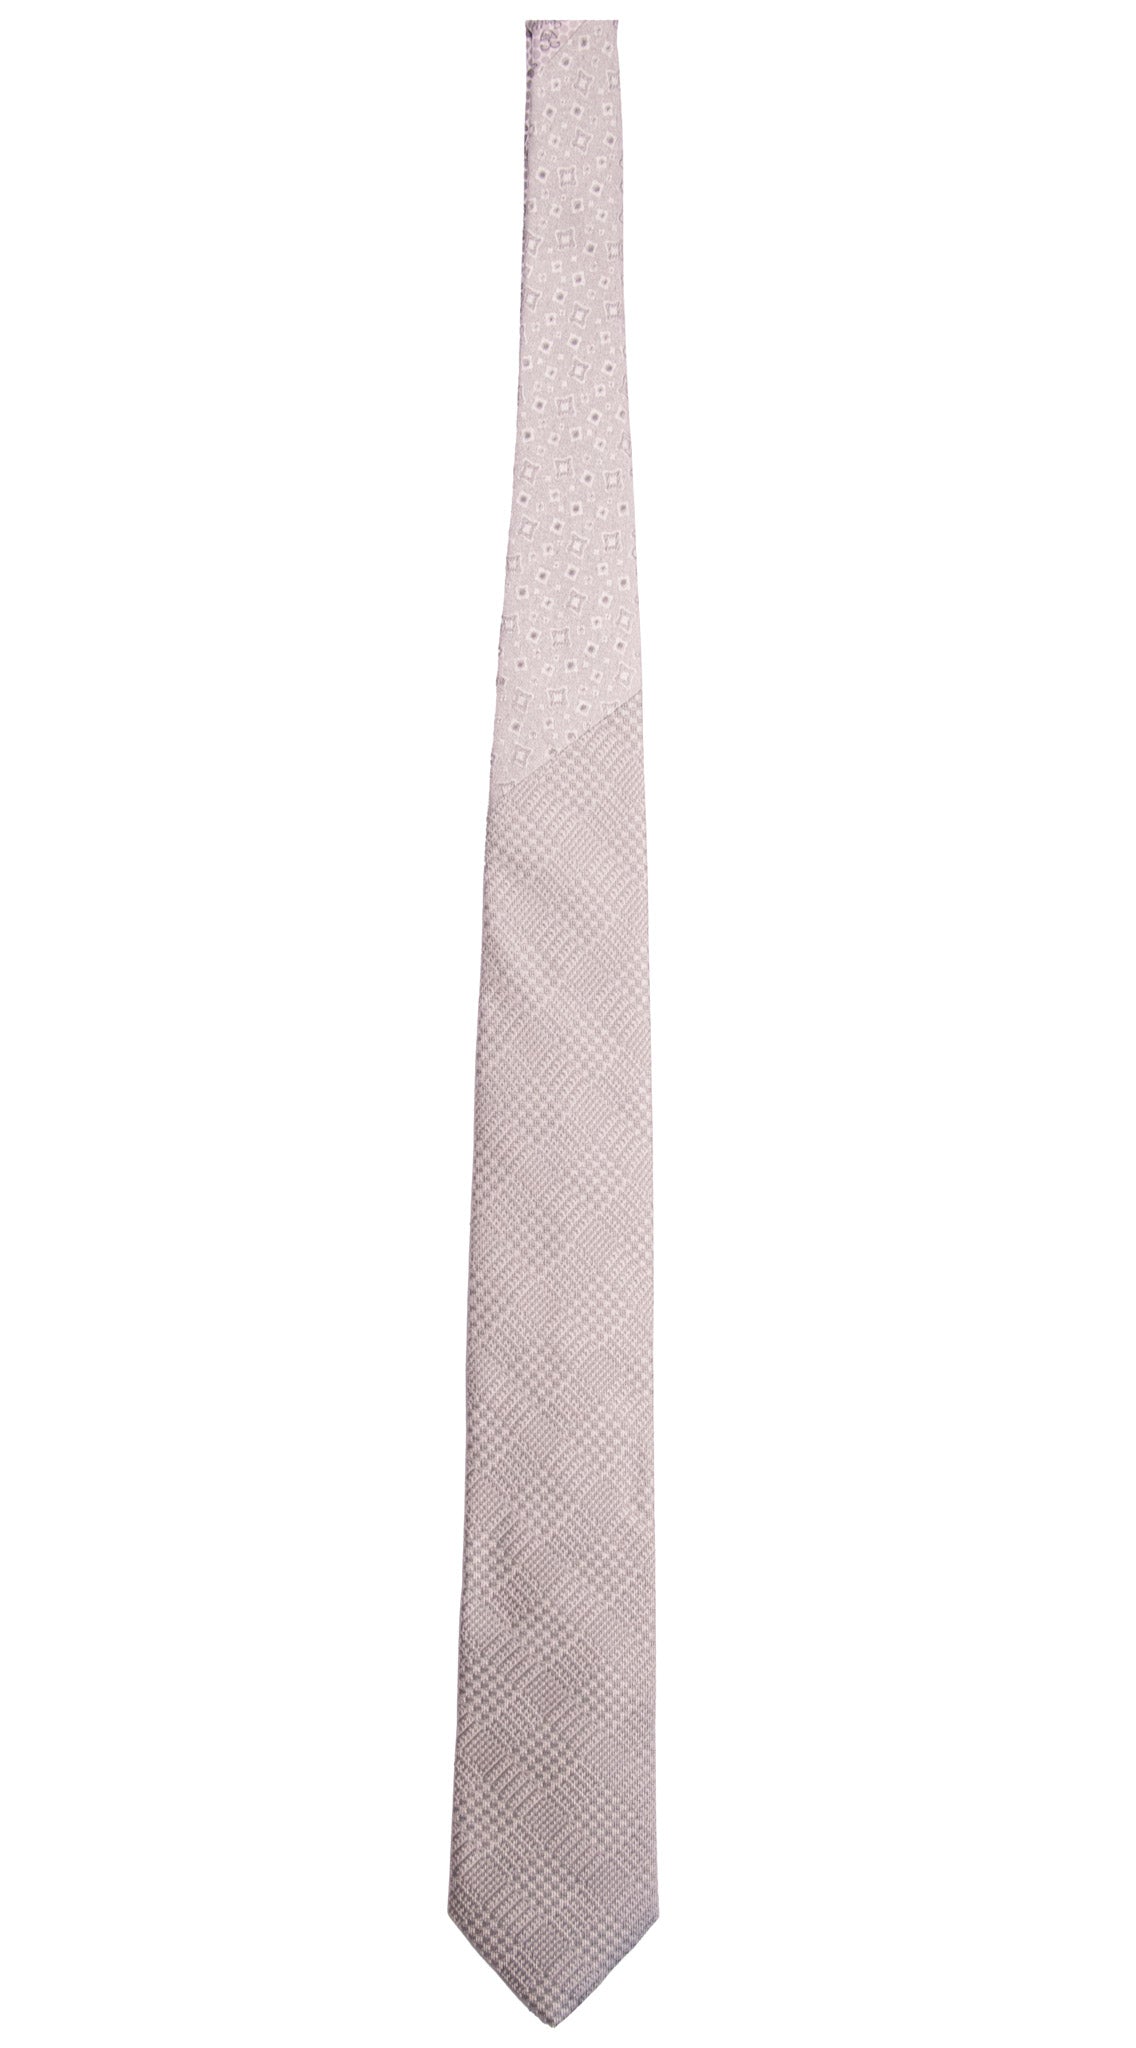 Cravatta Cerimonia Grigia Principe di Galles Nodo in Contrasto Grigio Fantasia Made in Italy Graffeo Cravatte Intera